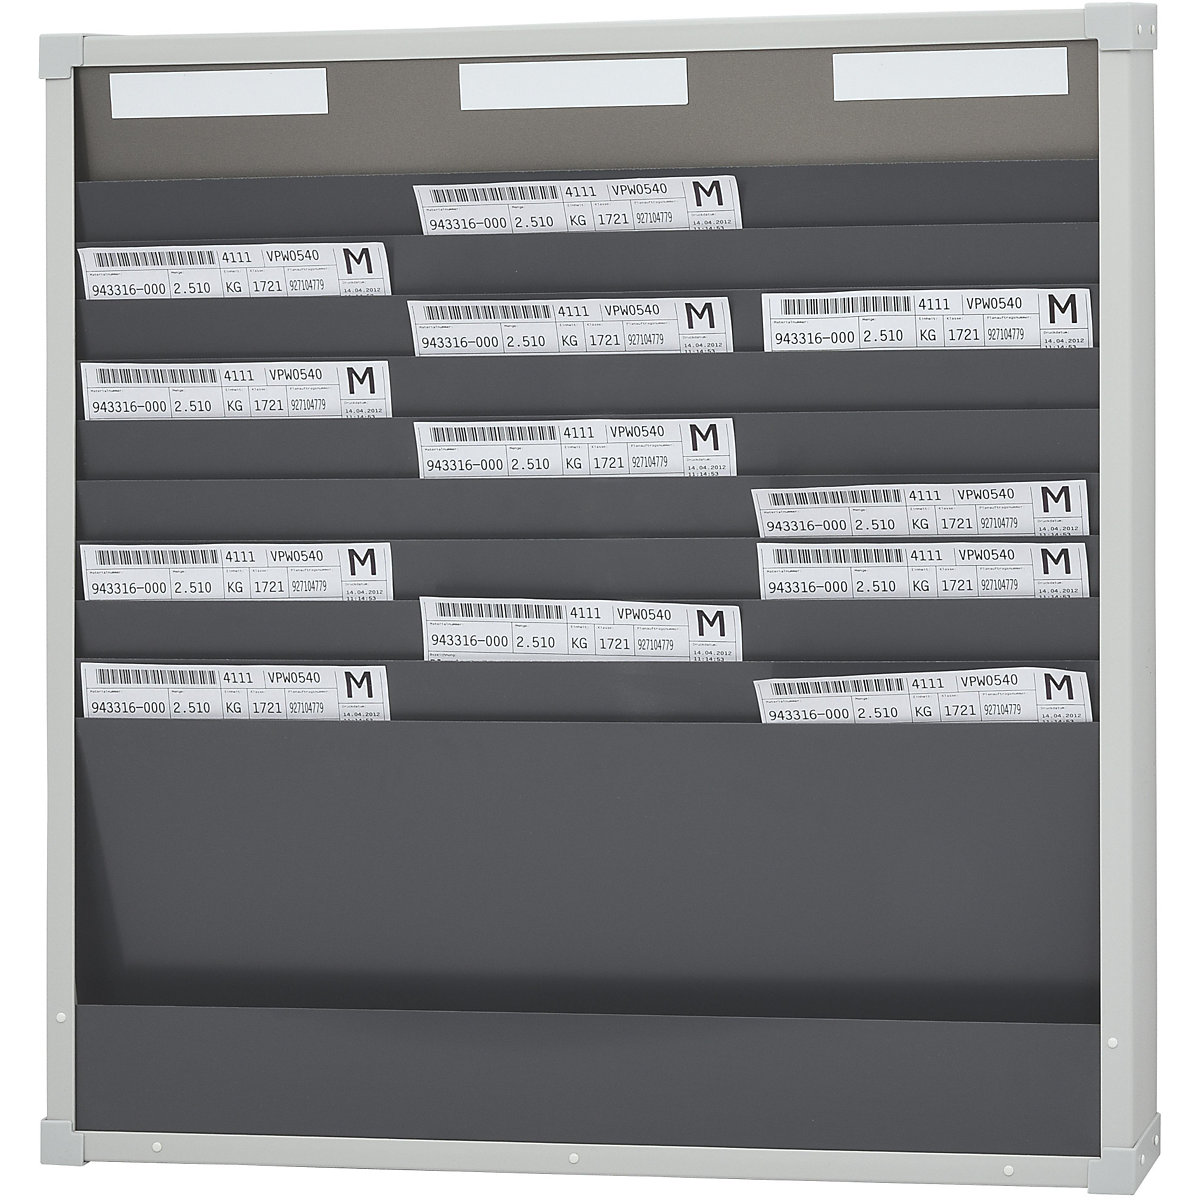 Panel modular clasificador para documentos – EICHNER (Imagen del producto 17)-16